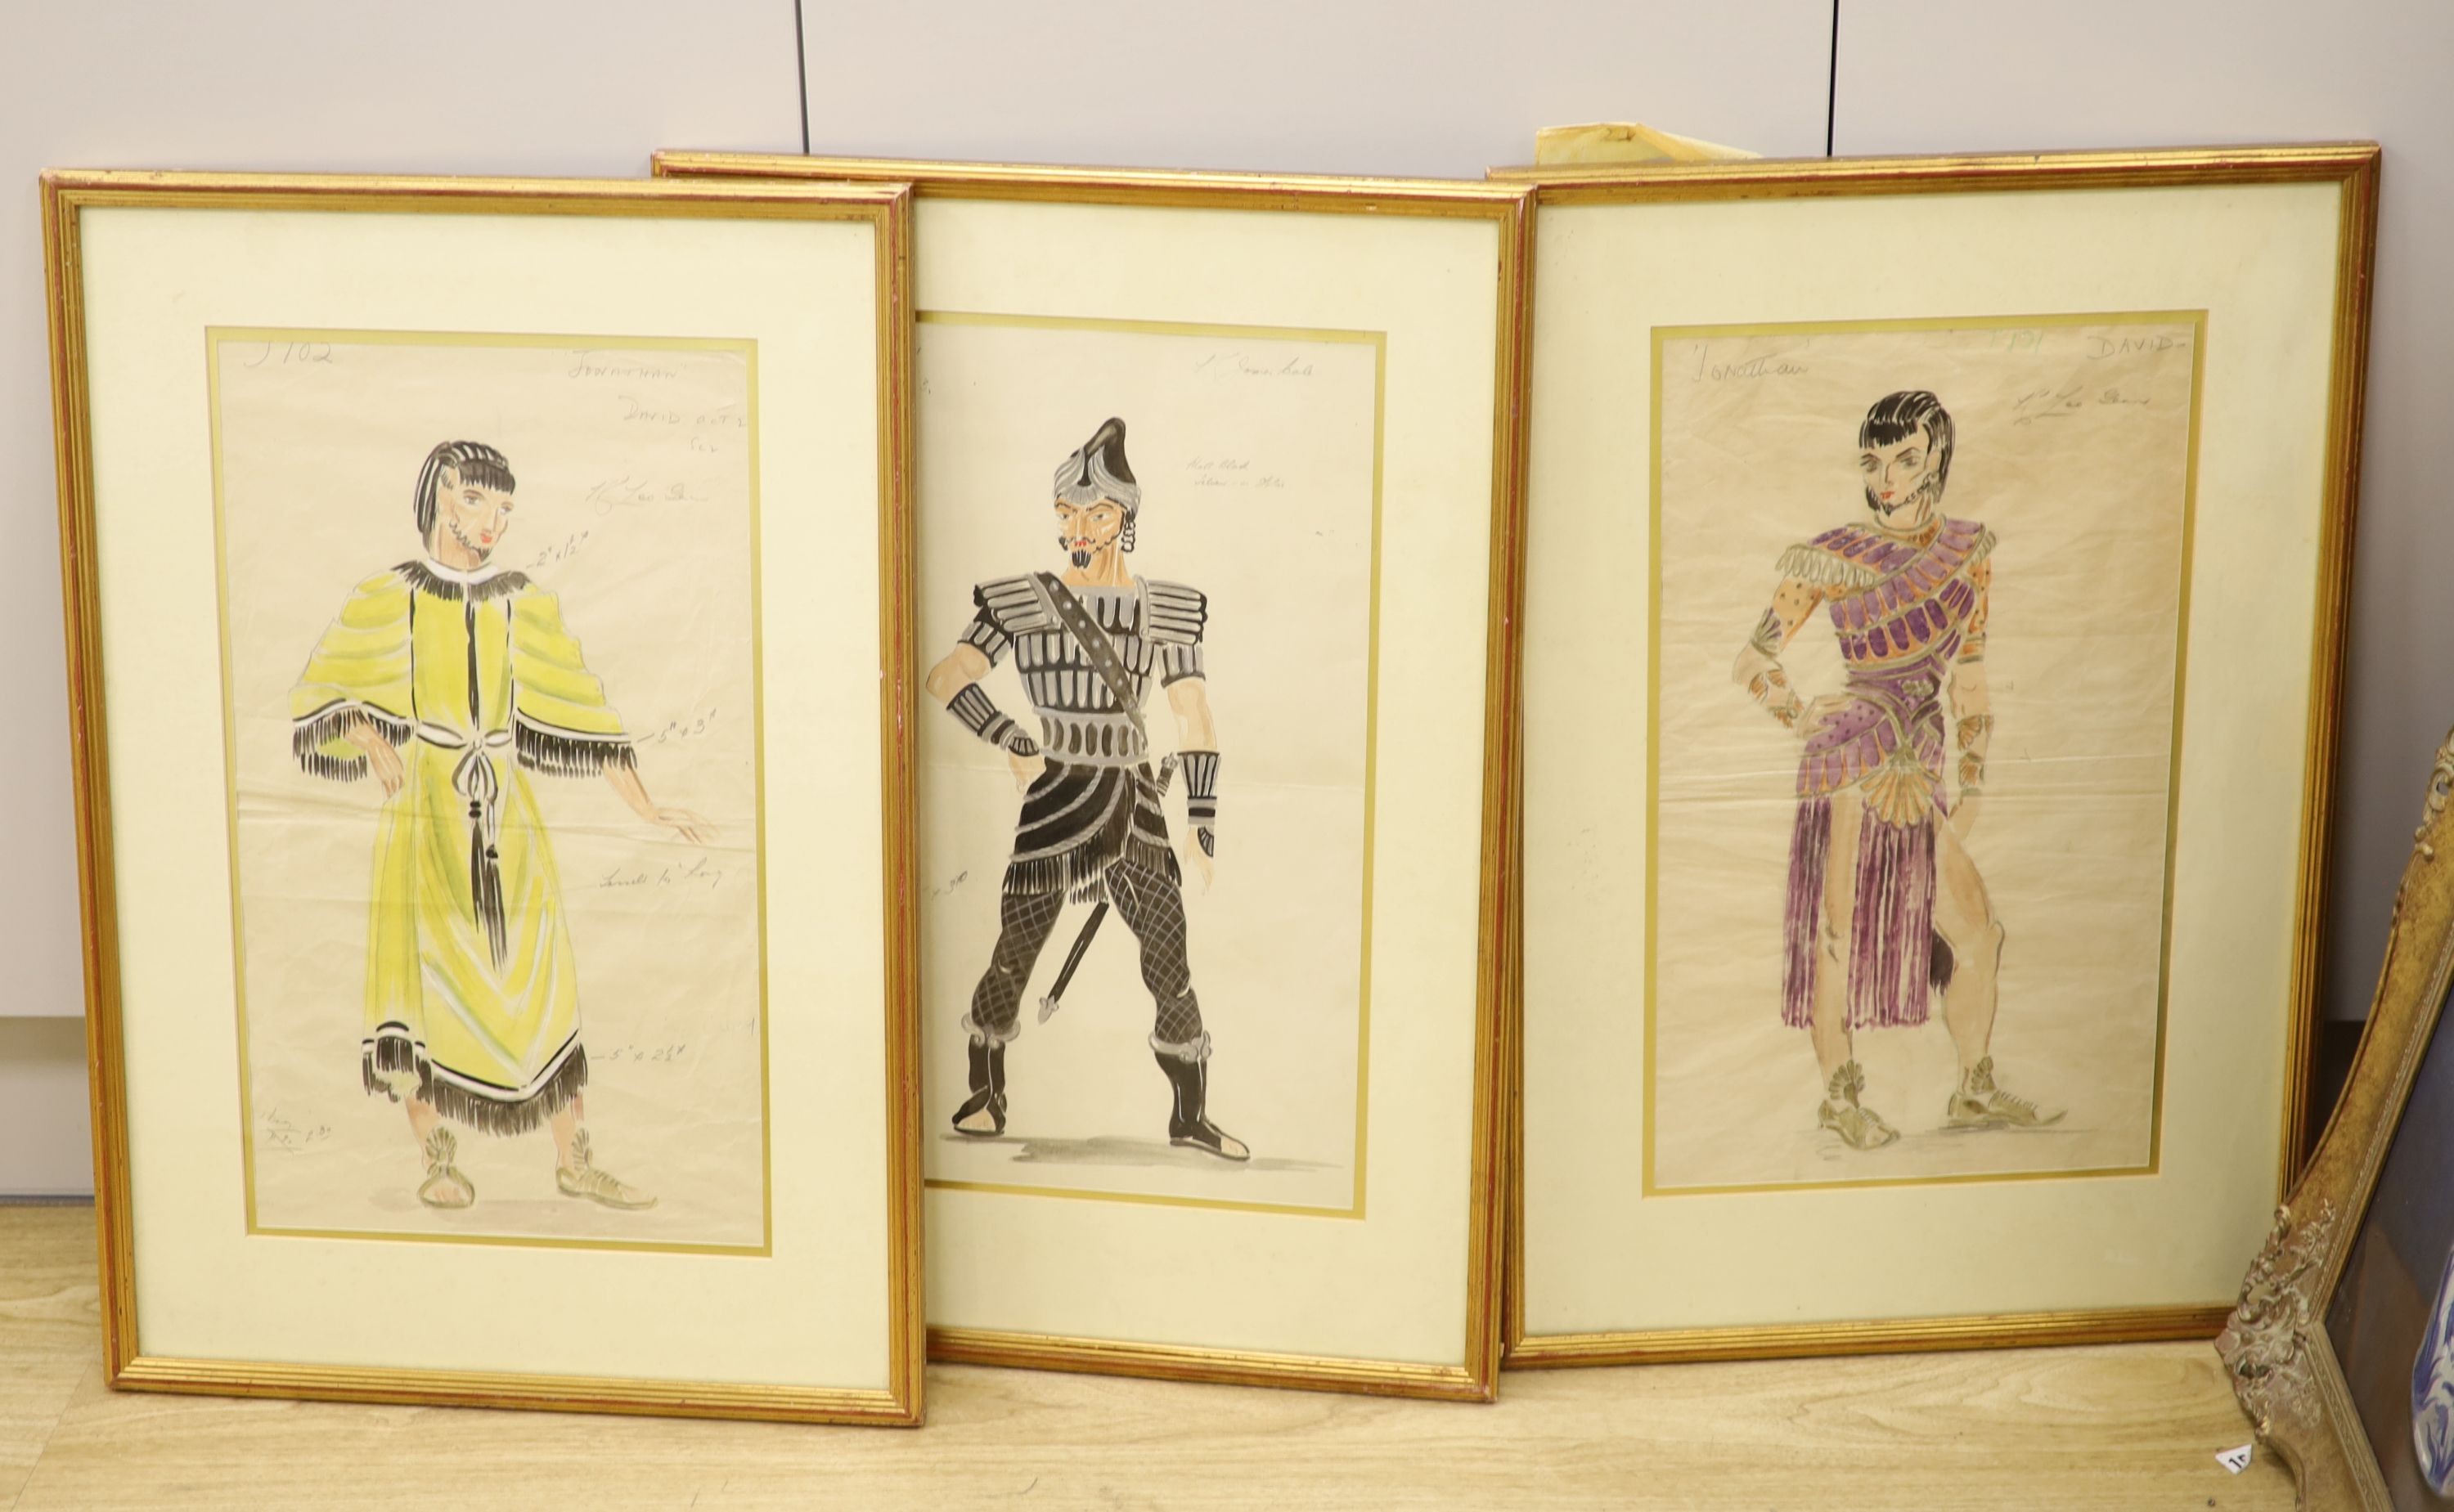 20th century English School, three watercolours, Costume designs for Jonathan, inscribed in pencil, 45 x 27cm